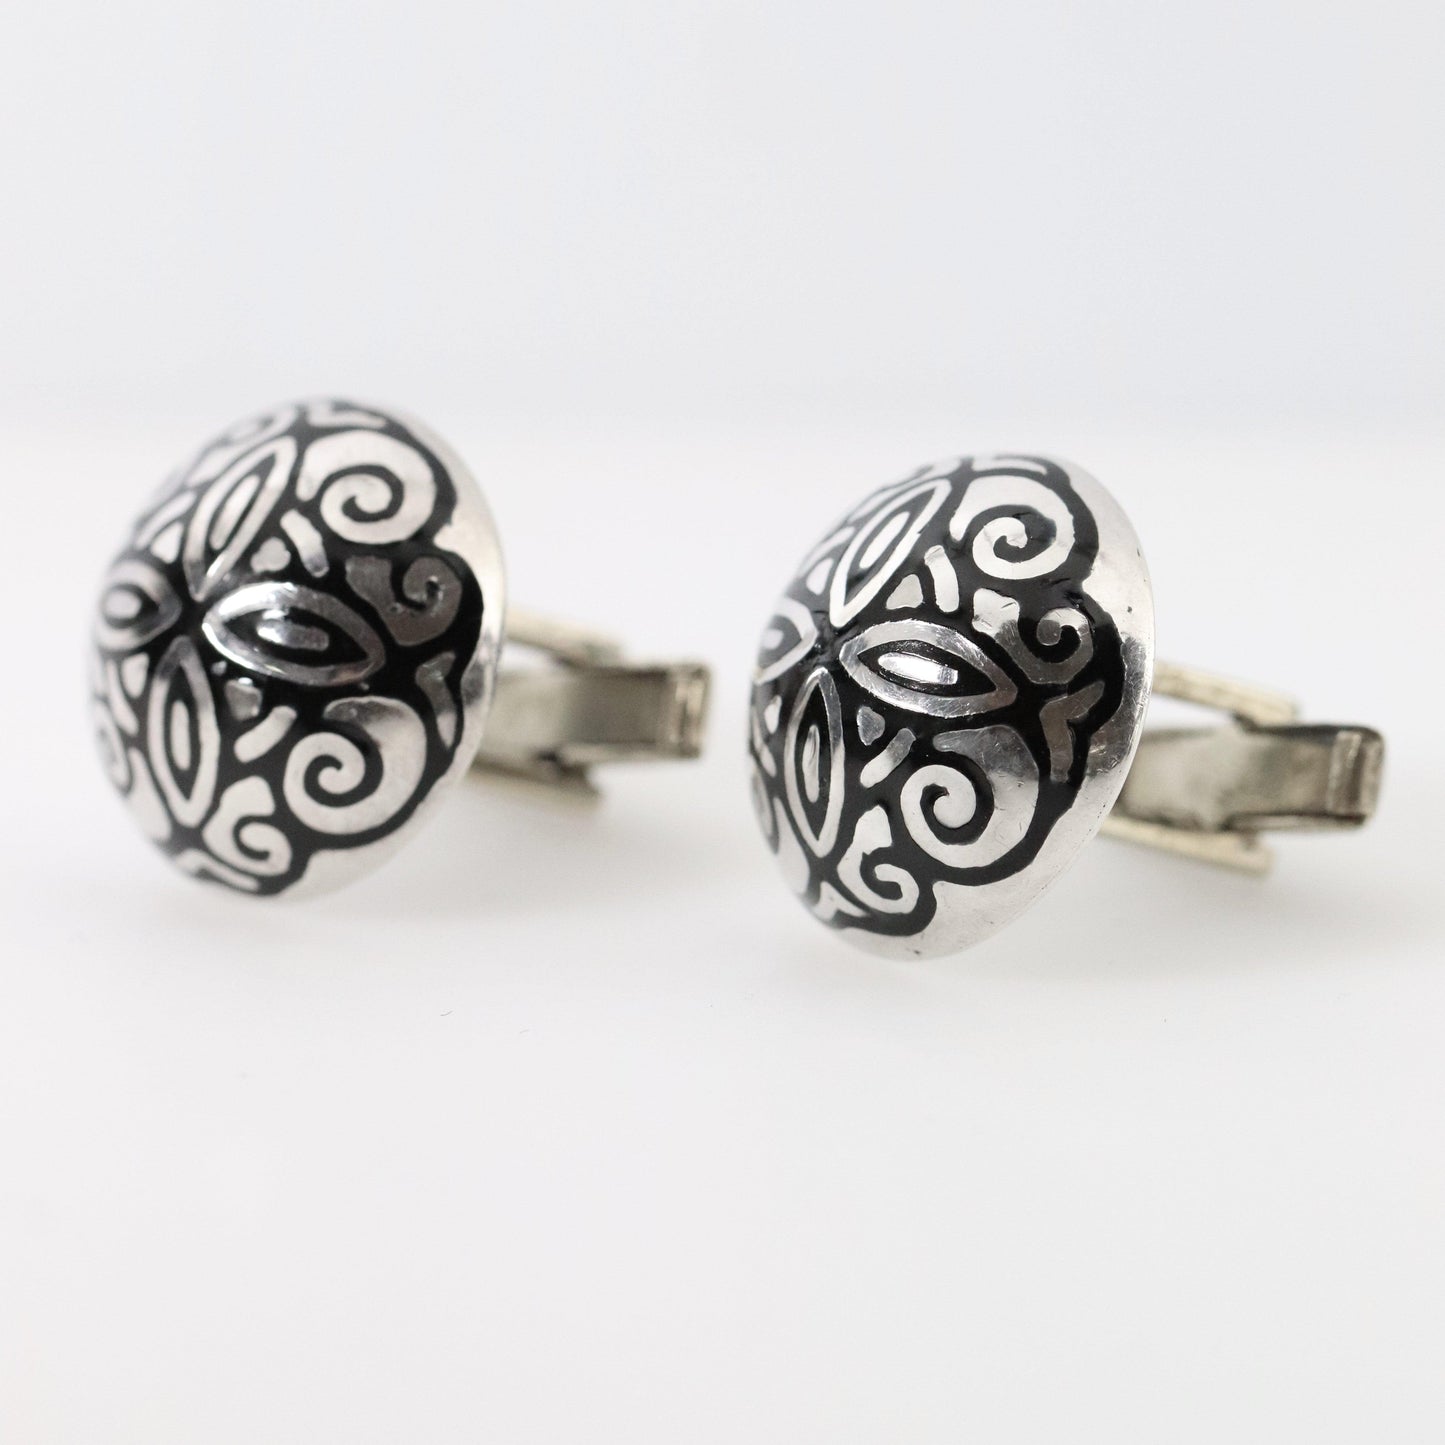 Vintage Margot de Taxco Mexican Jewelry | Round Floral Black Enamel Cufflinks - Carmel Fine Silver Jewelry